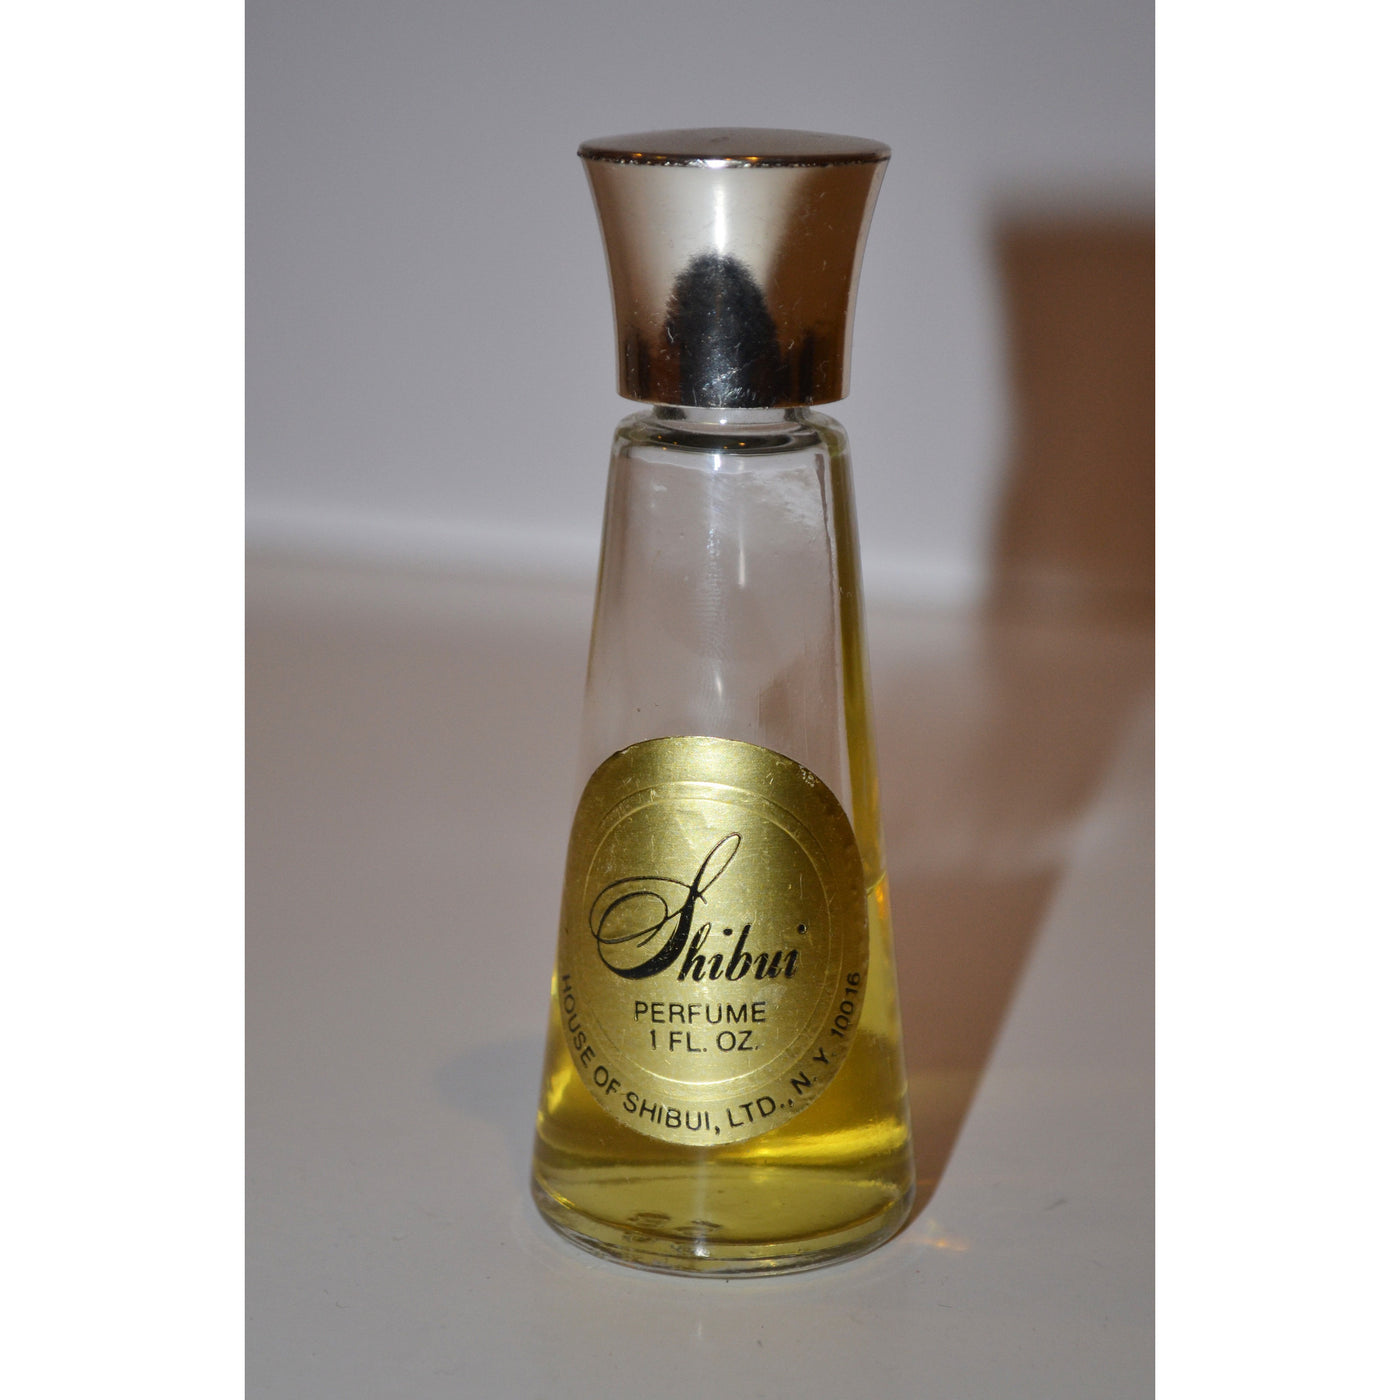 Vintage Shibui Perfume